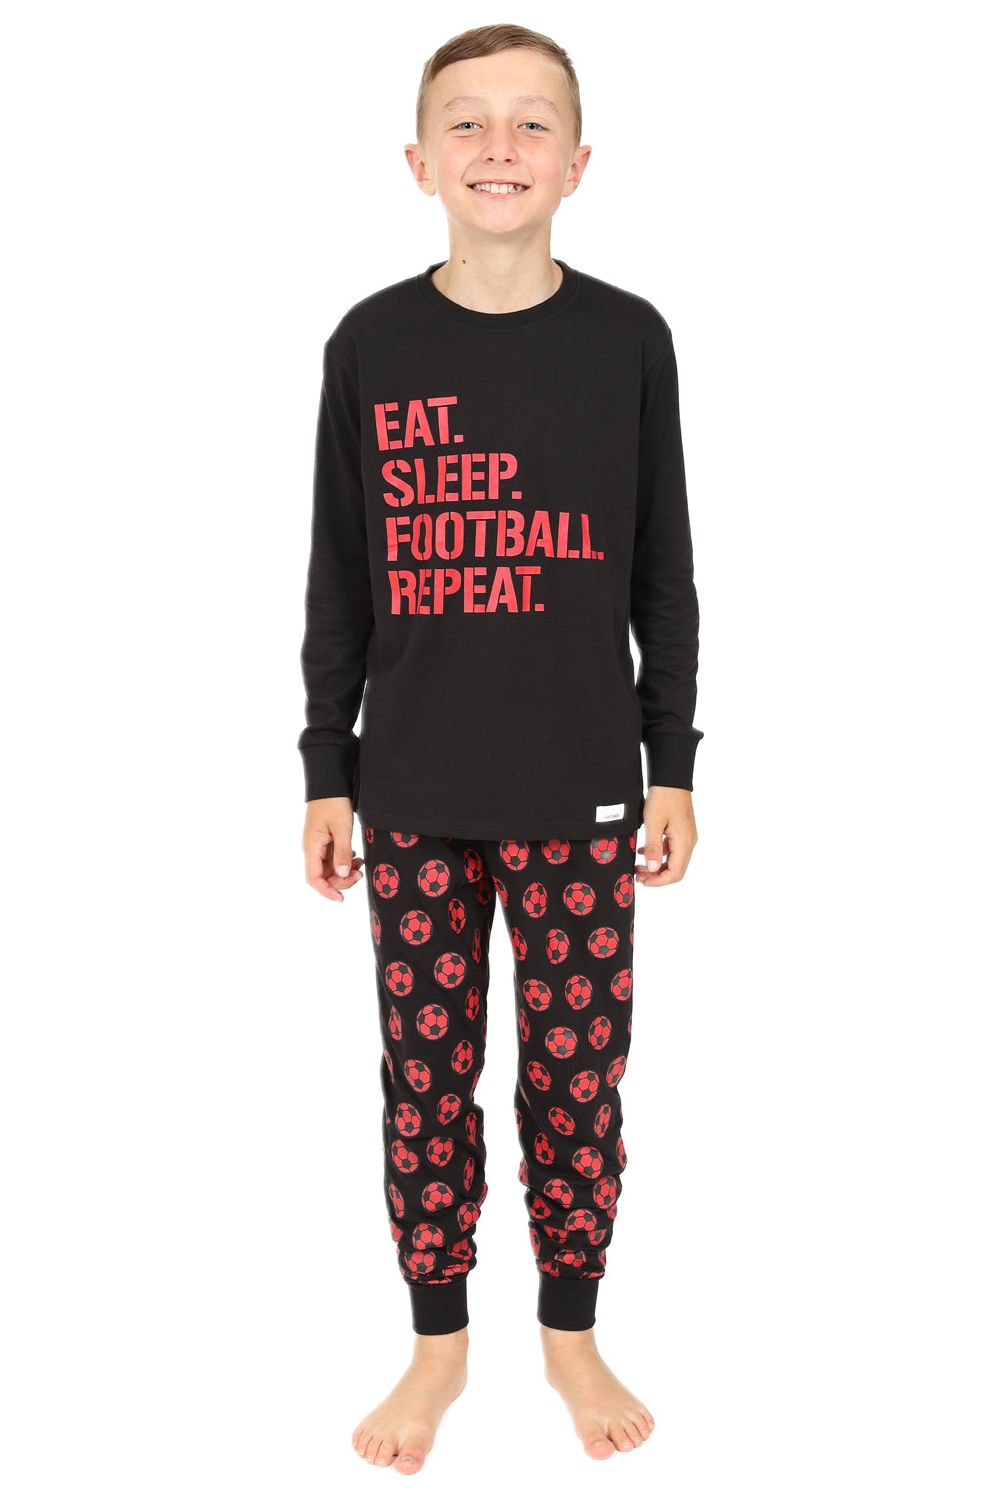 Eat Sleep Football Repeat Red Long Pyjamas